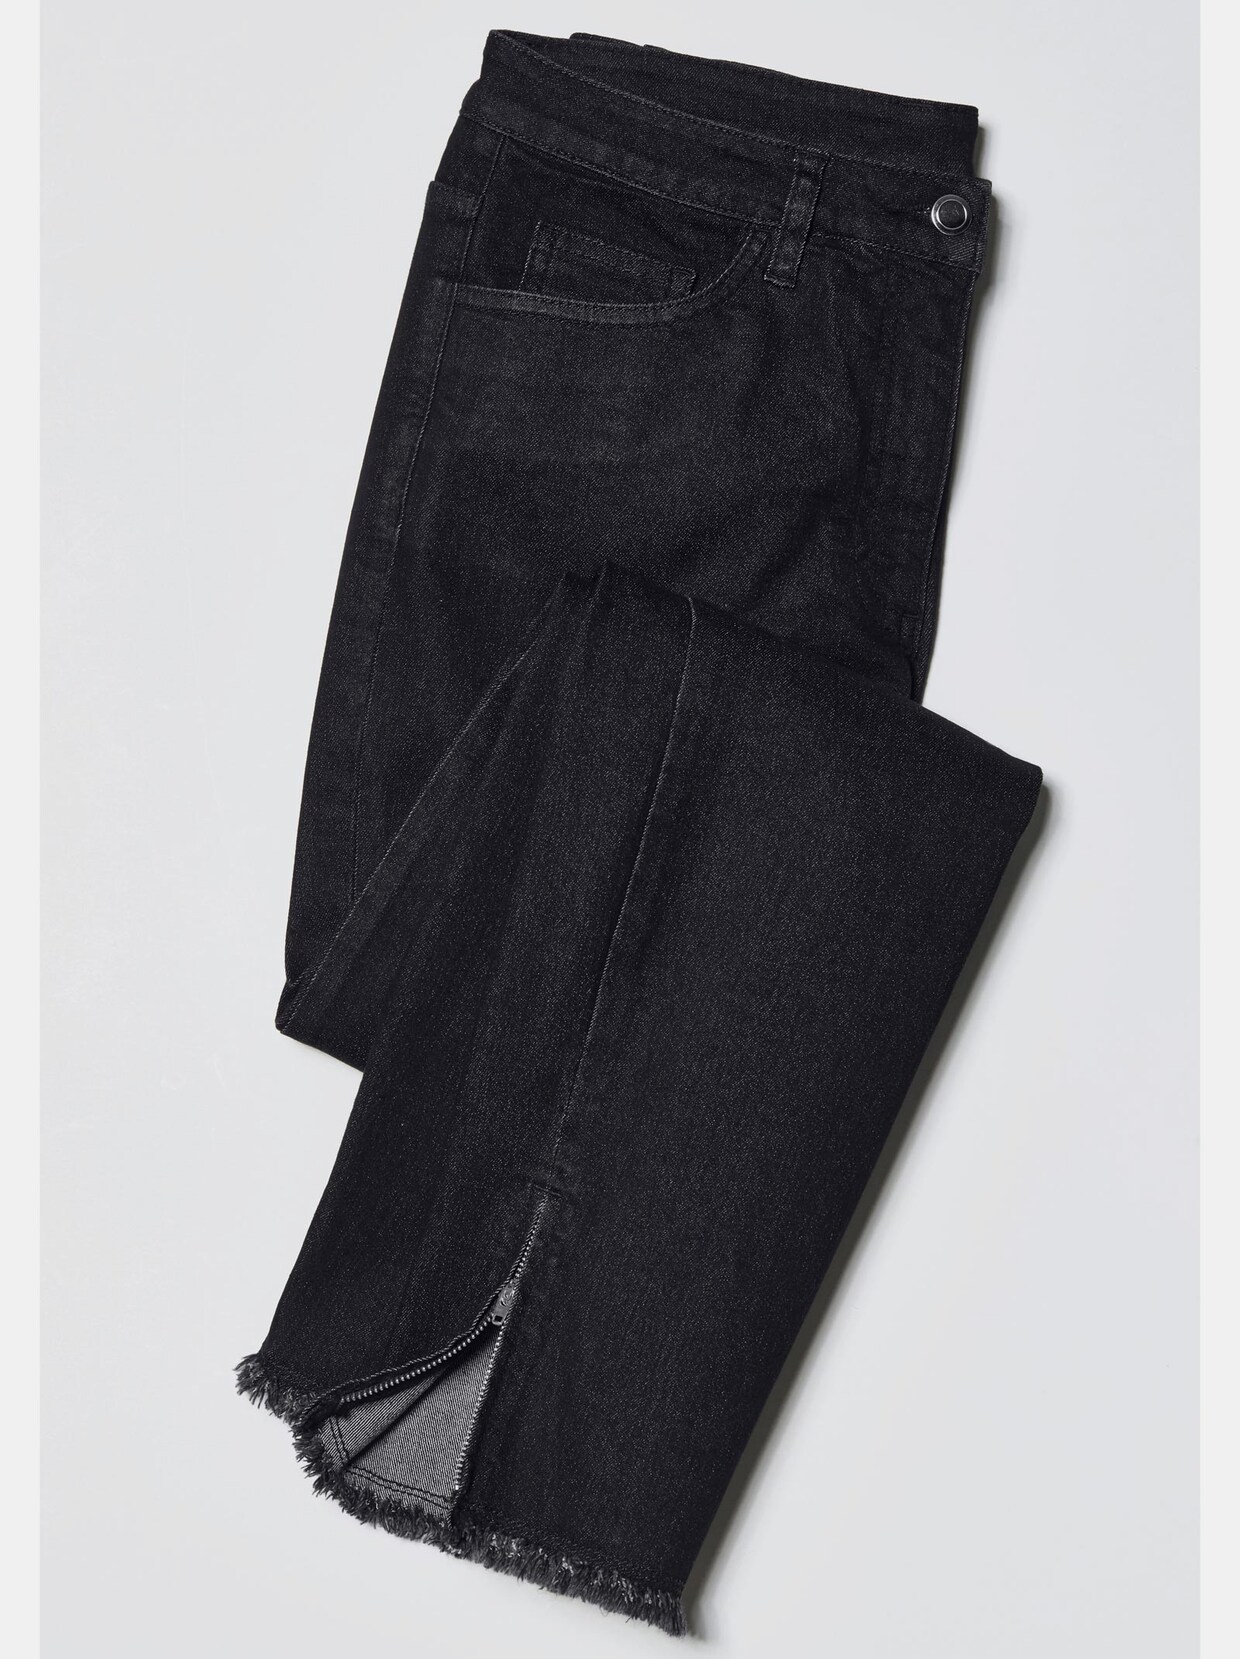 Jeans - black denim